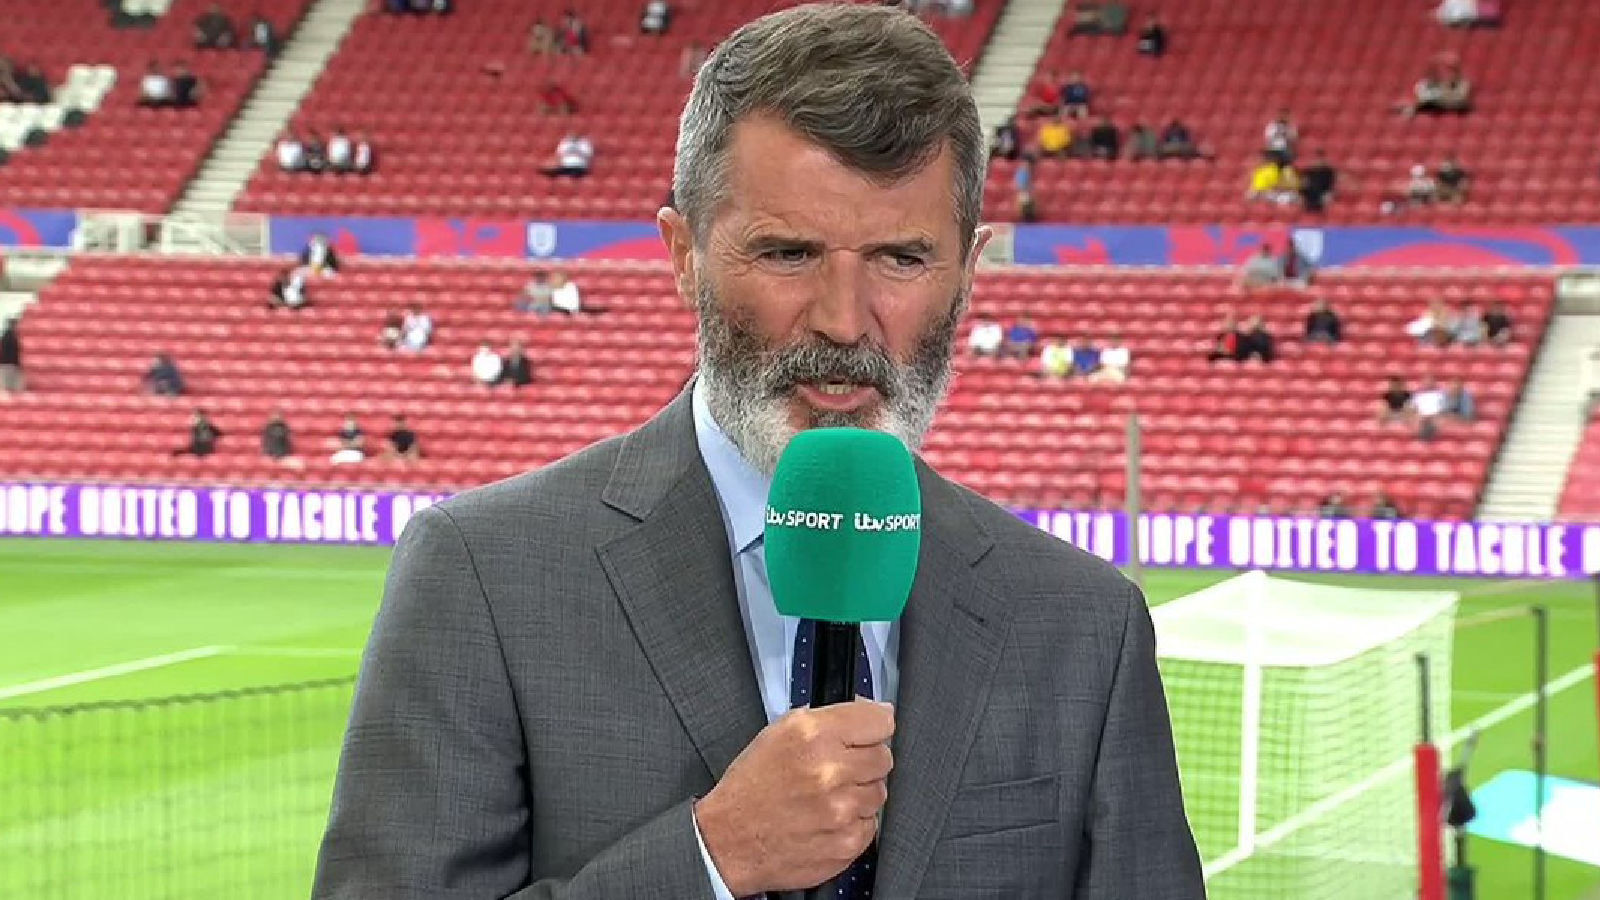 Video: Roy Keane slams Jordan Henderson’s England selection